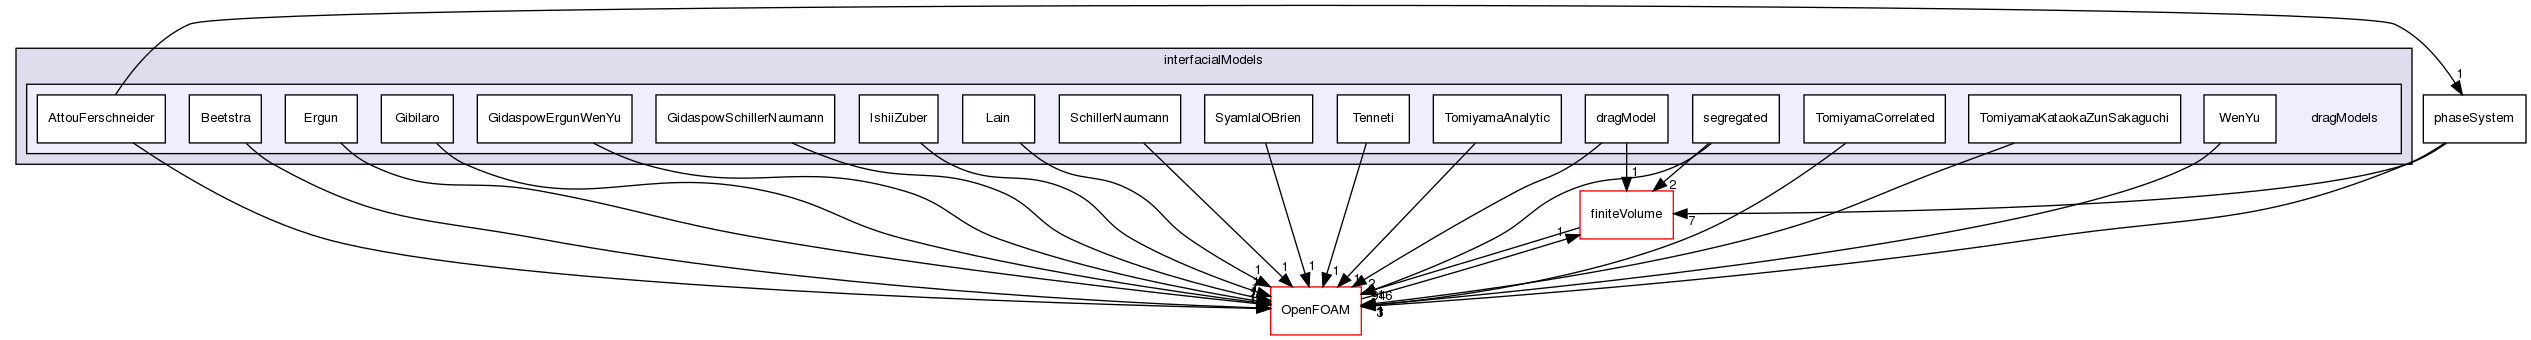 src/phaseSystemModels/reactingEuler/multiphaseSystem/interfacialModels/dragModels